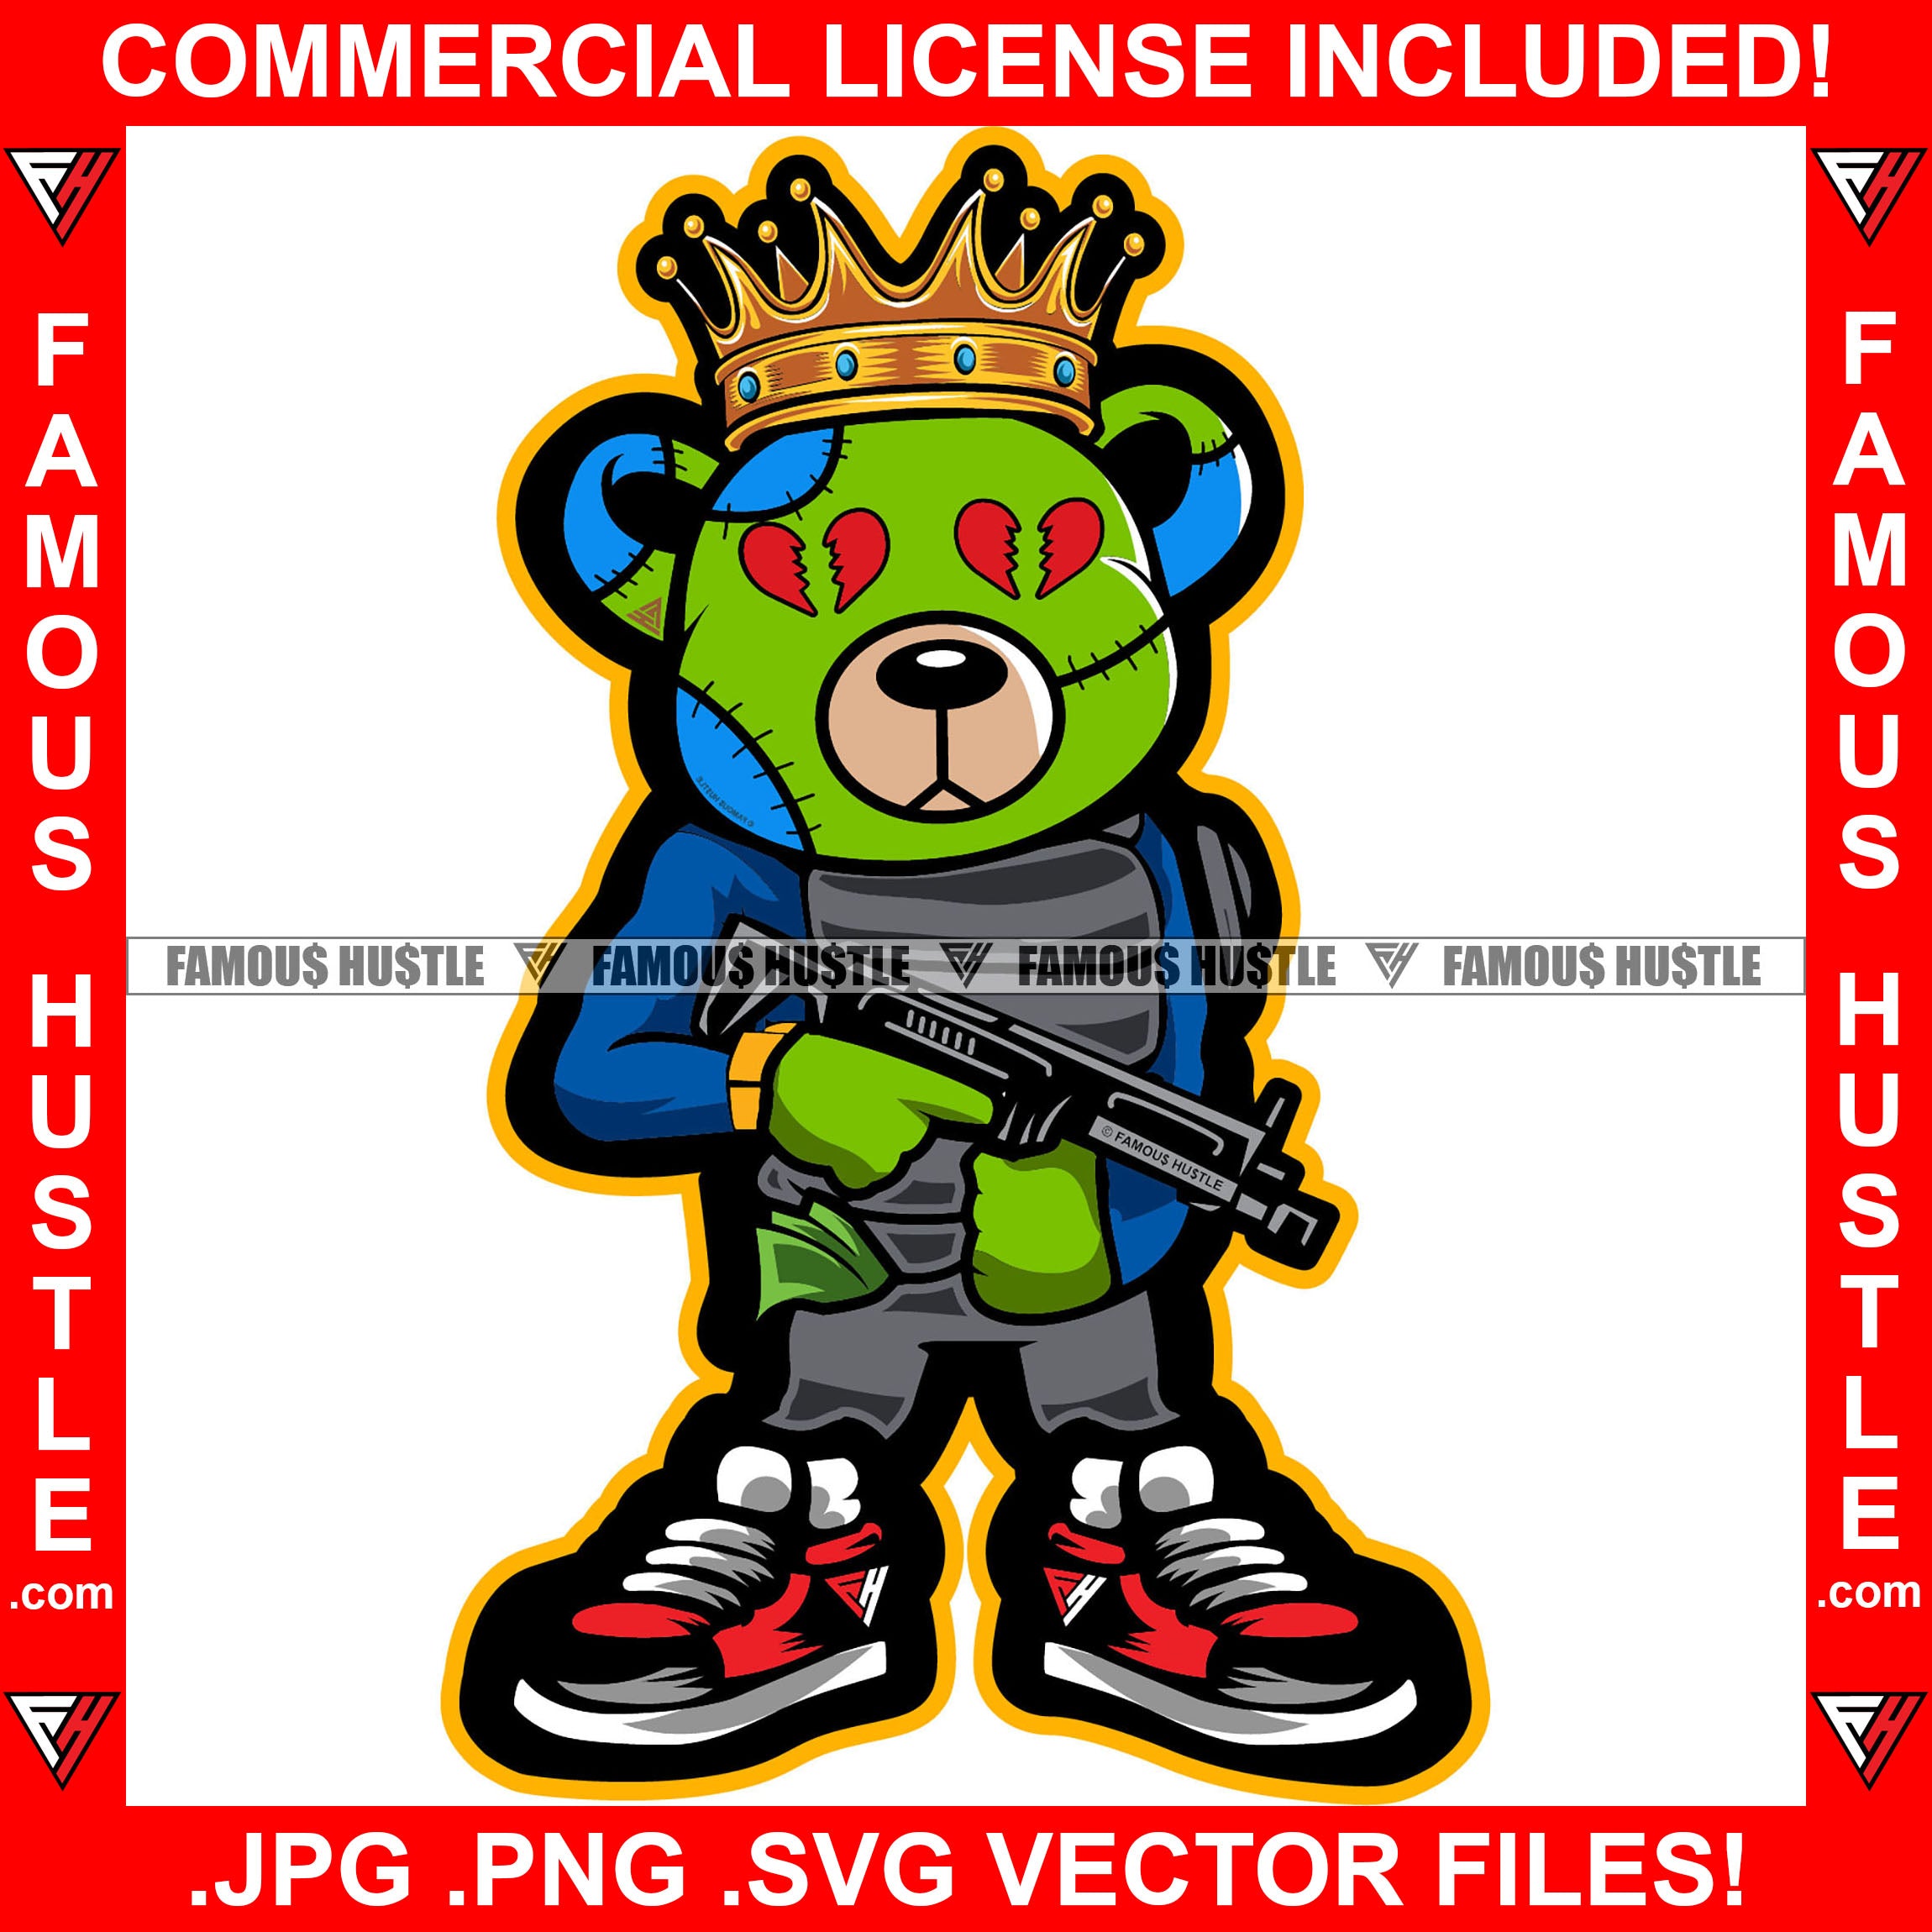 496 Gangster Bear Images Stock Photos  Vectors  Shutterstock